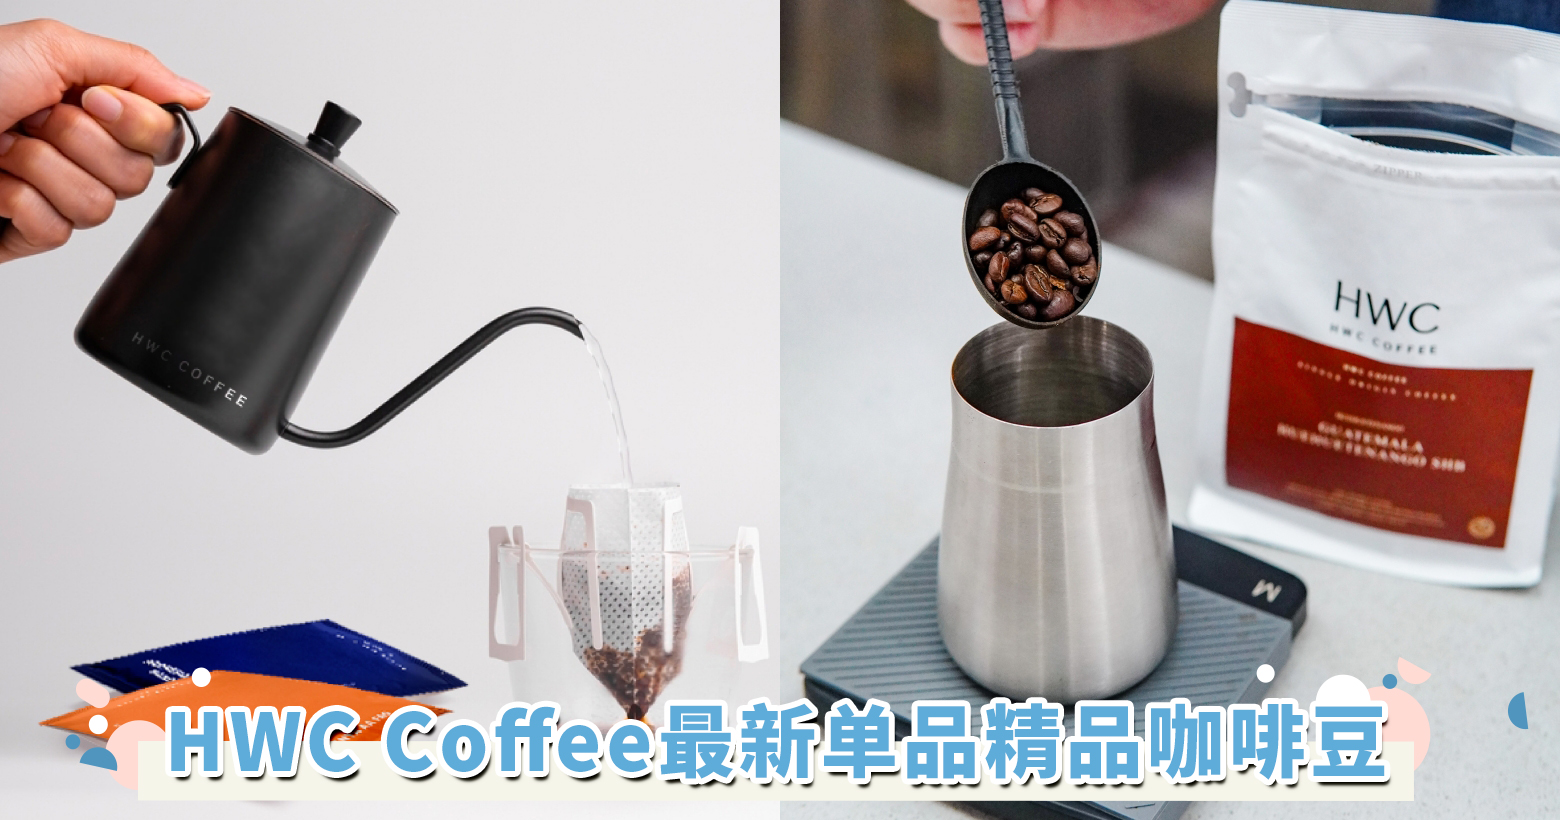 HWC Coffee新推单品精品咖啡